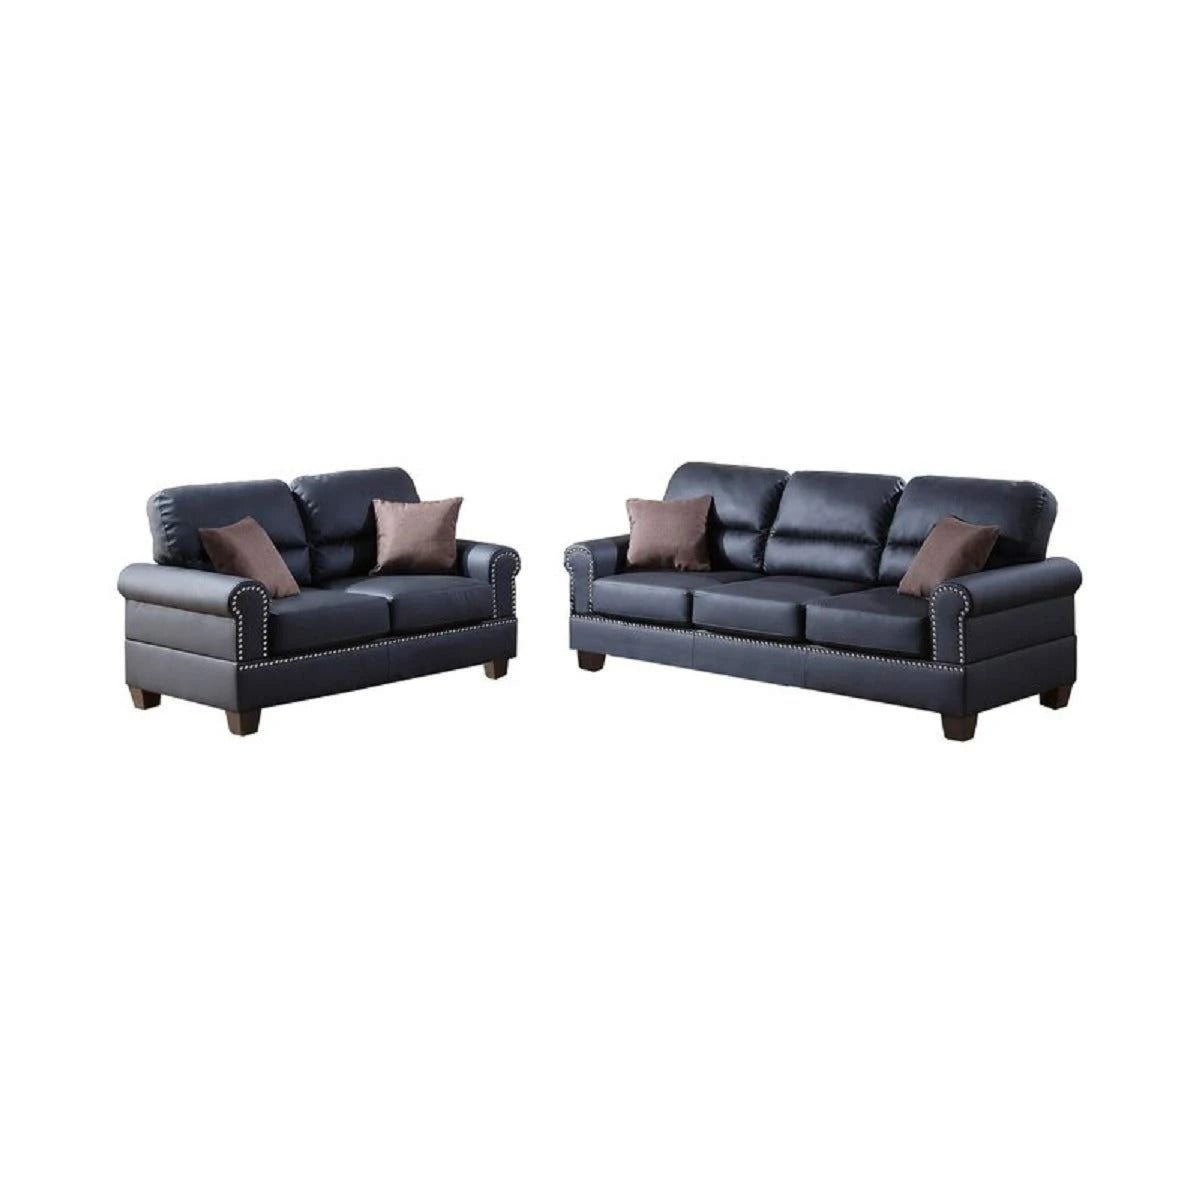 Designer Sofa Set:- ZIAA 3+2 Leatherette Sofa Set Luxury Furniture